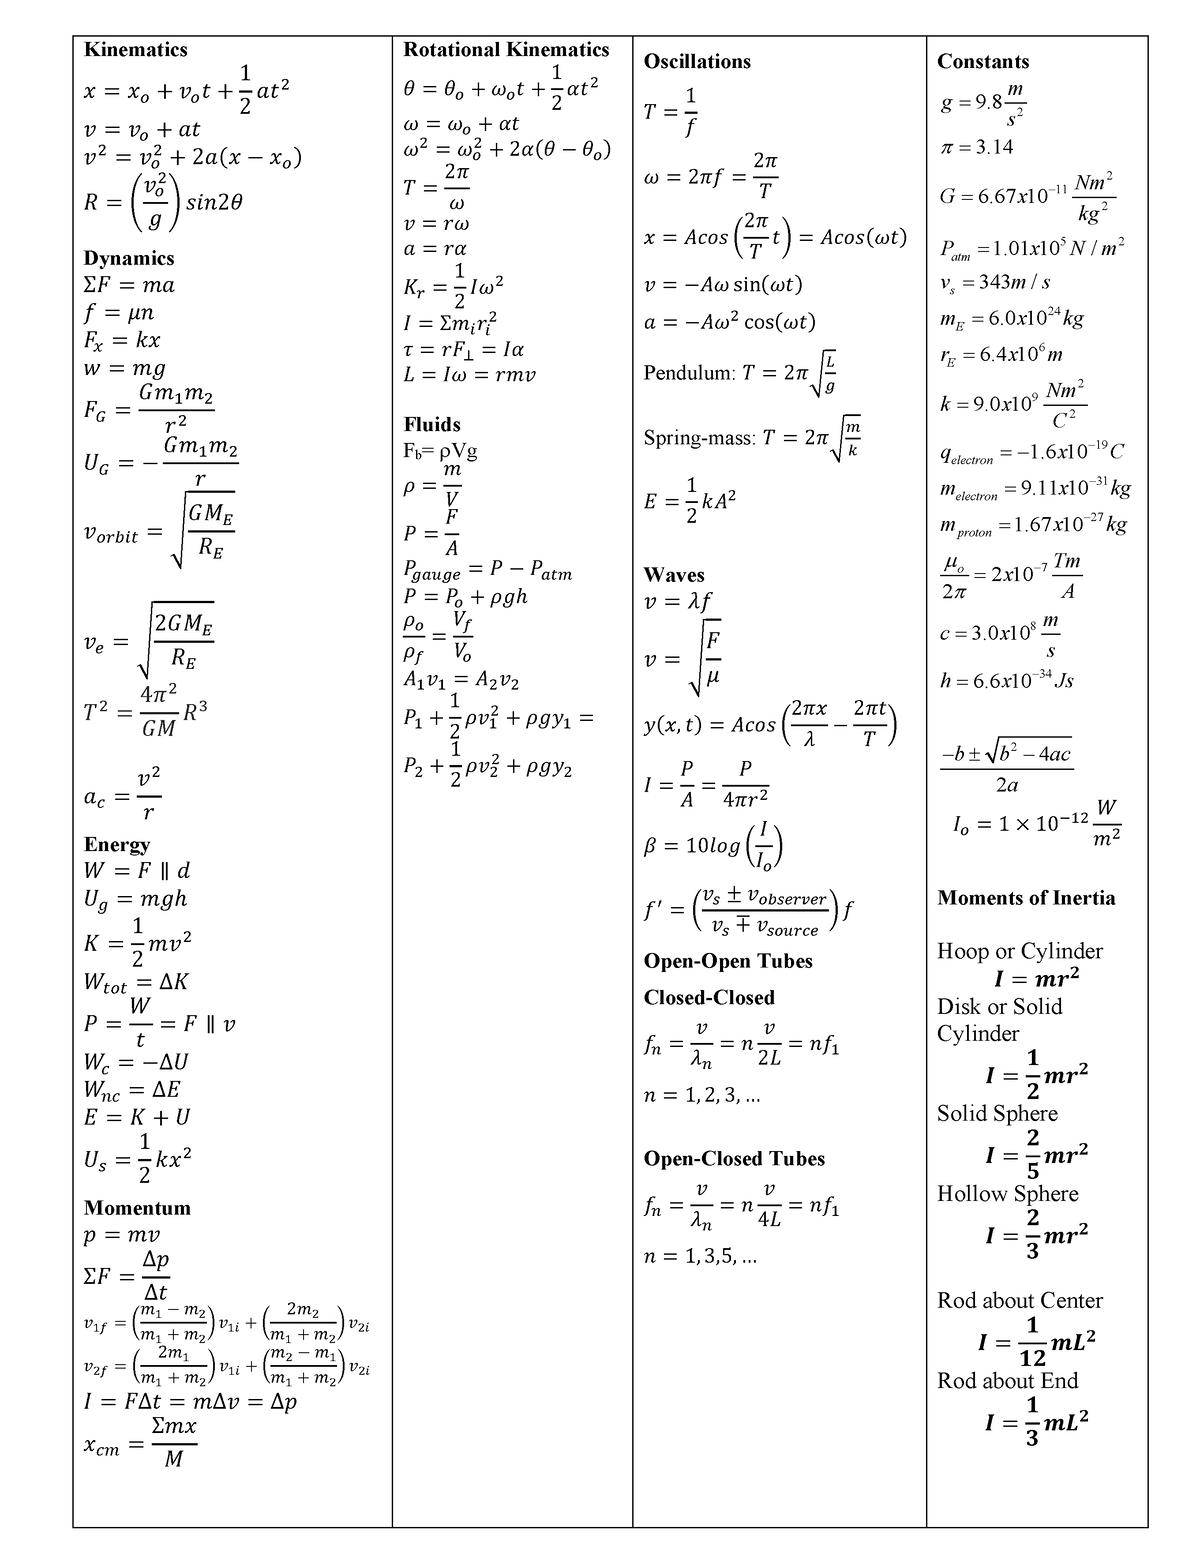 2070 equation sheet Correct - Kinematics 𝑥𝑥 = 𝑥𝑥𝑜𝑜 + 𝑣𝑣𝑜𝑜 𝑡𝑡 + 1 2 𝑎𝑎𝑡𝑡 ...